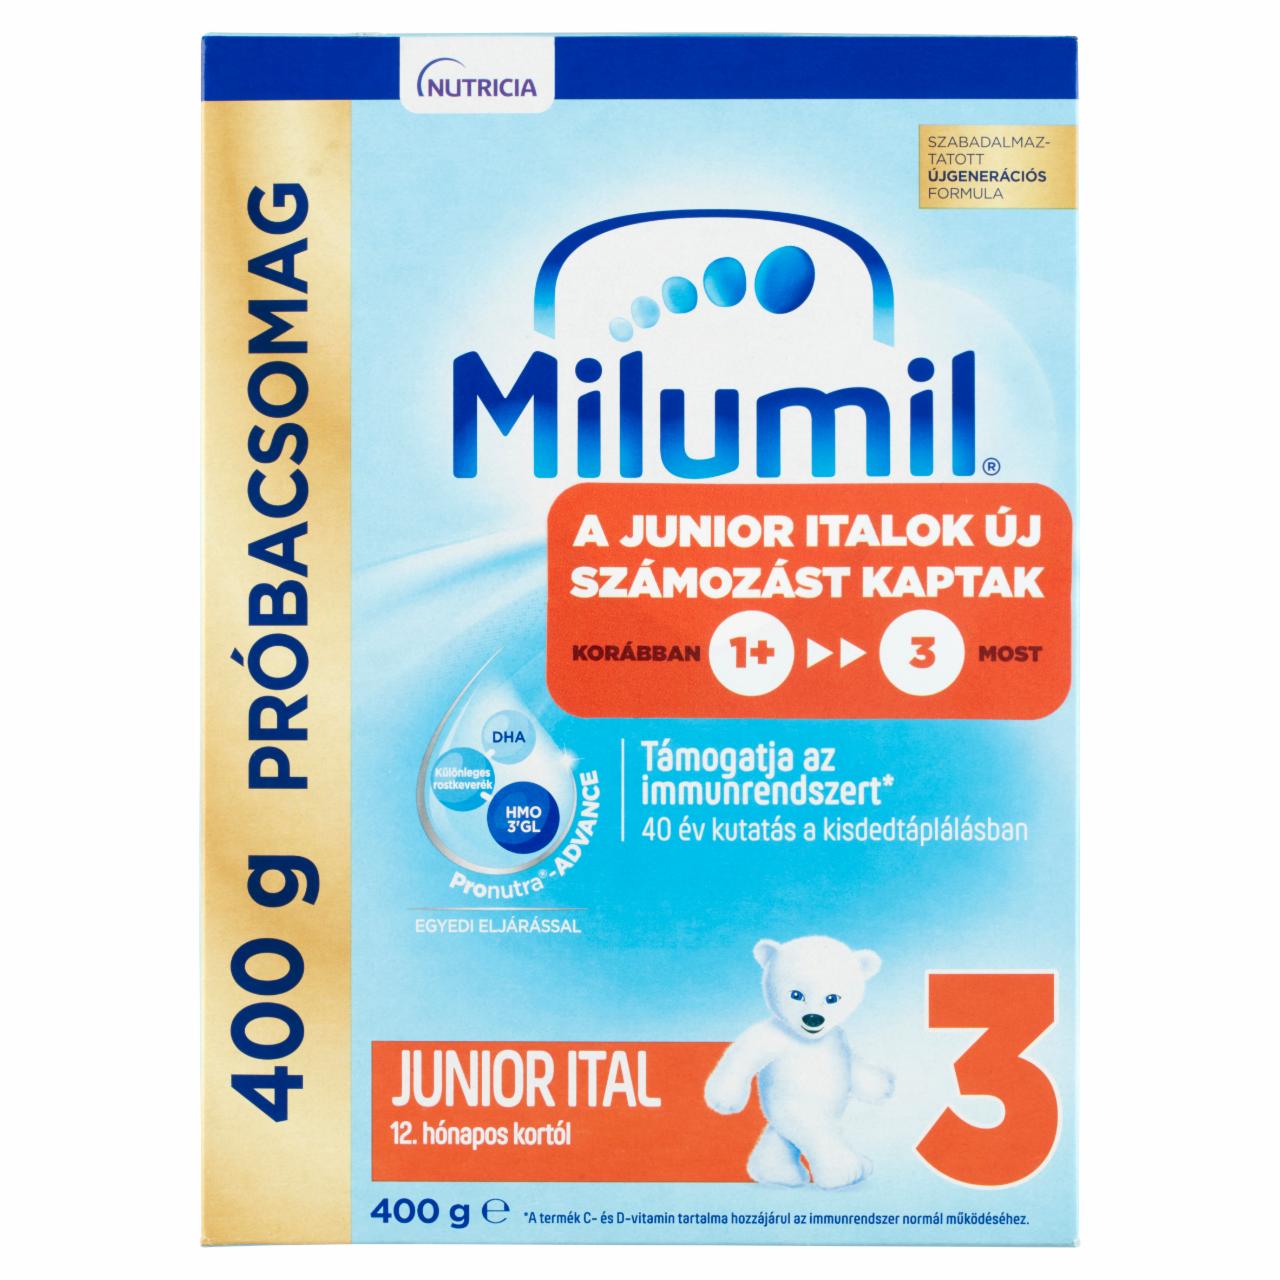 Képek - Milumil Nutri-Biotik 3 Junior tejalapú anyatej-kiegészítő tápszer 12. hónapos kortól 400 g